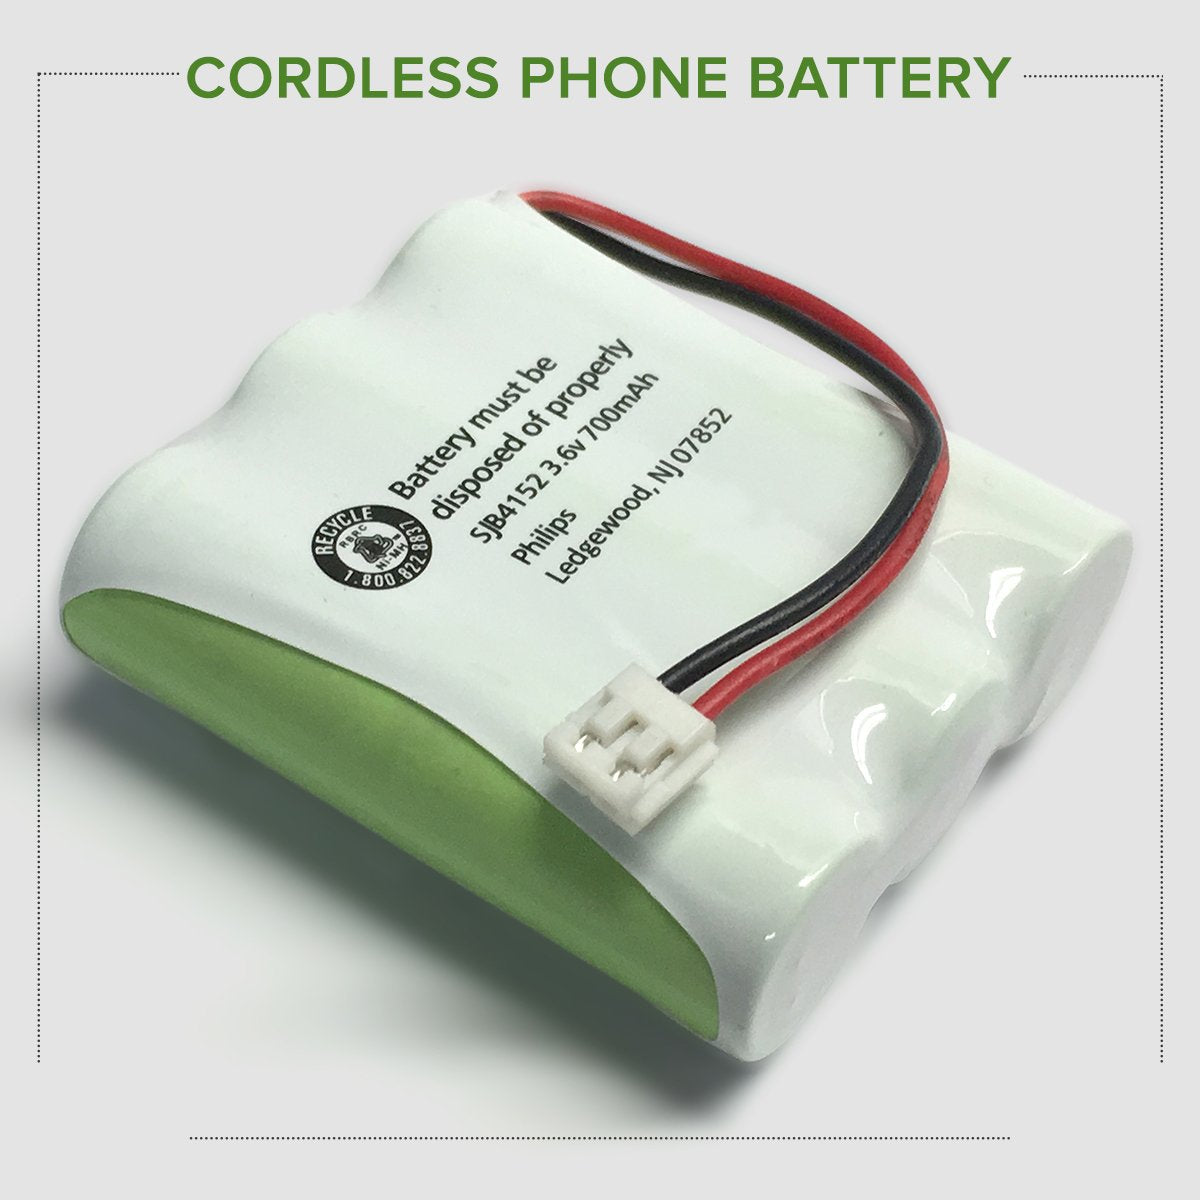 GE 2-6943 Cordless Phone Battery